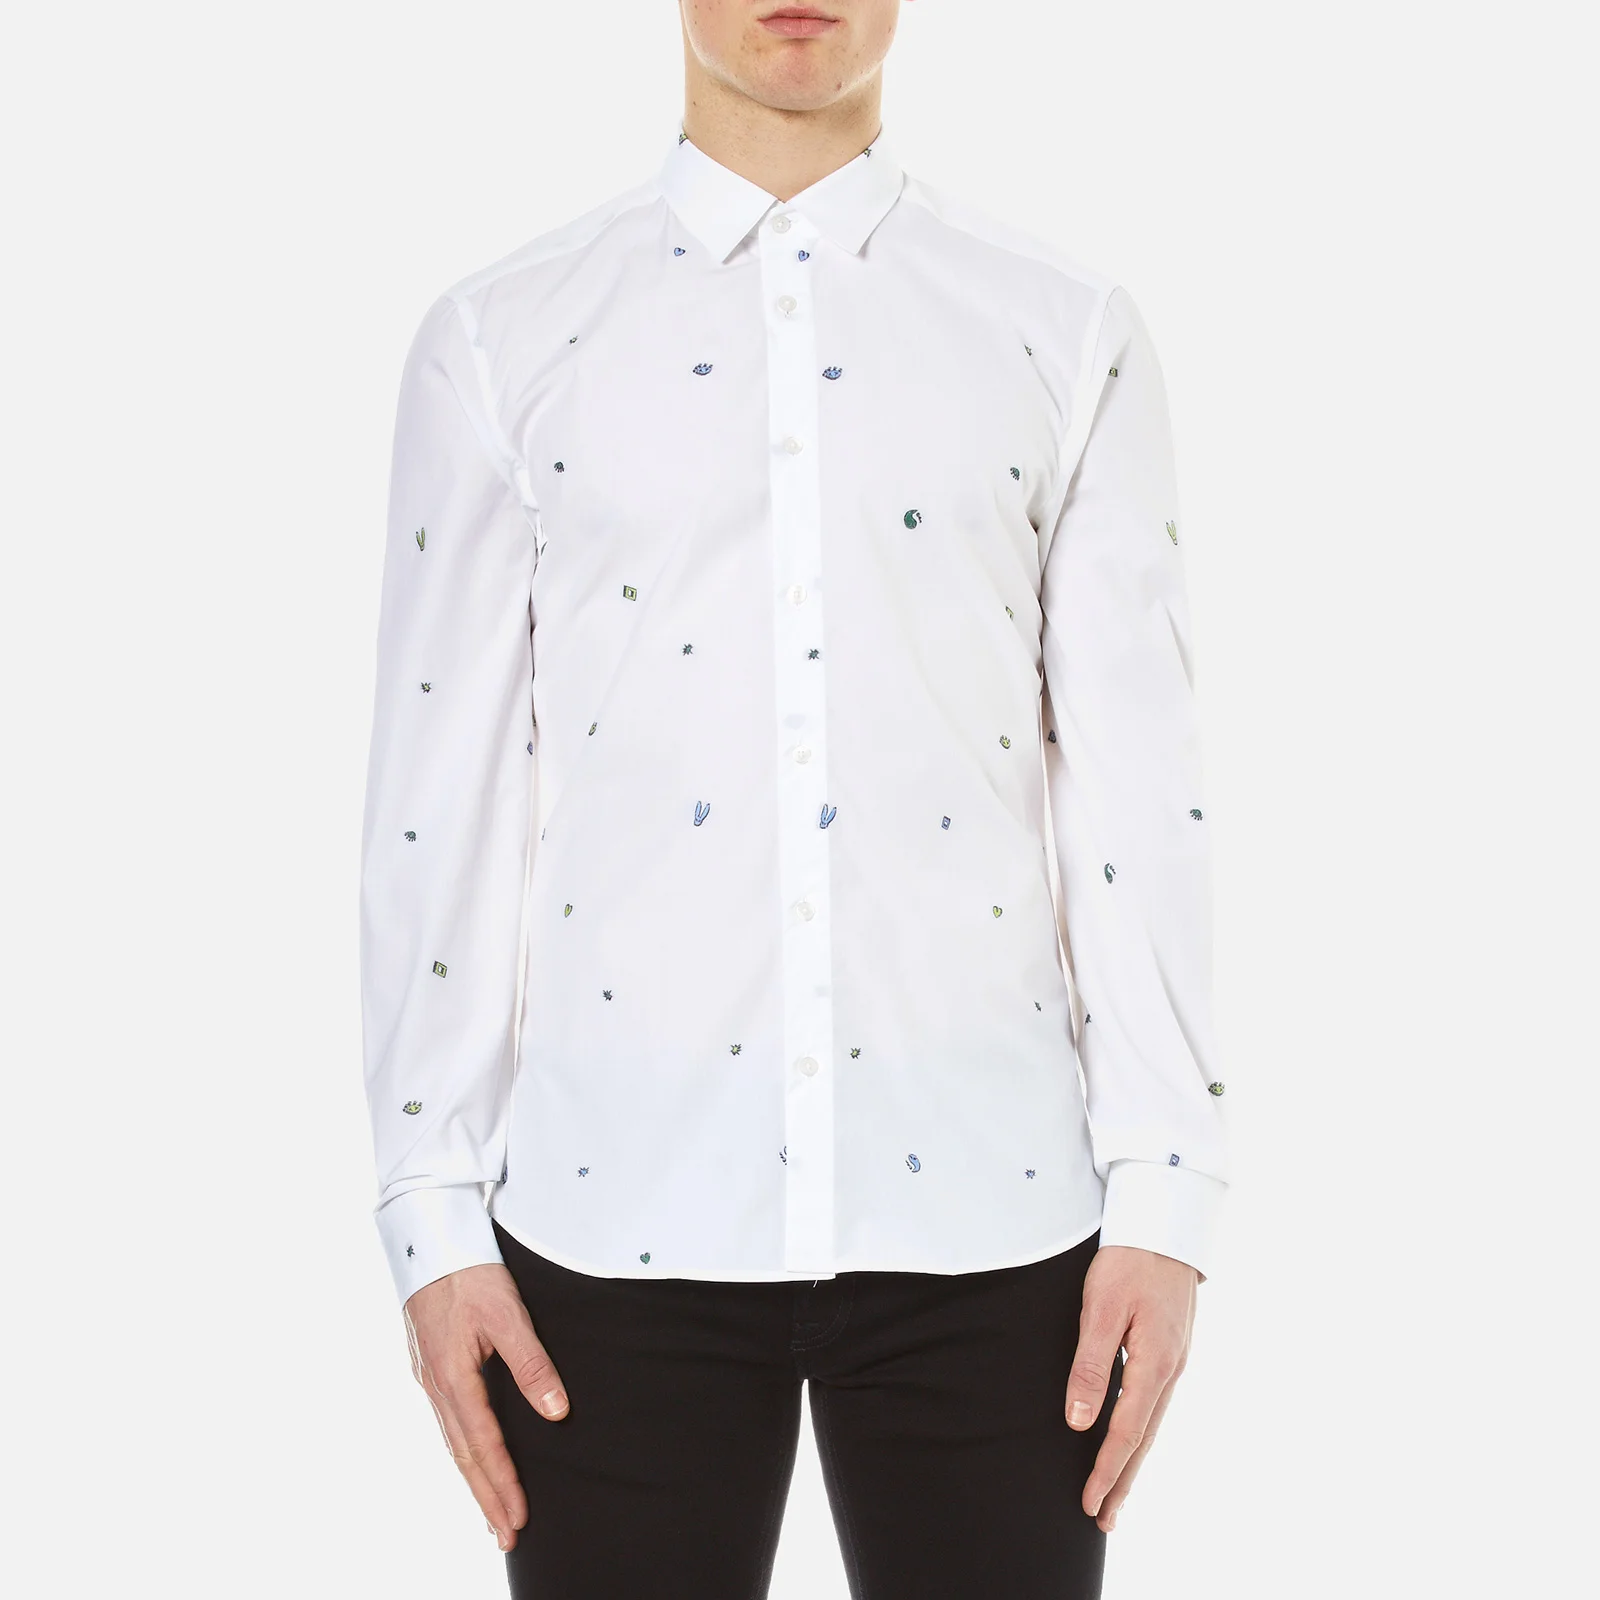 KENZO Men's Charms Fil Coupe Jaquard Shirt - White Image 1